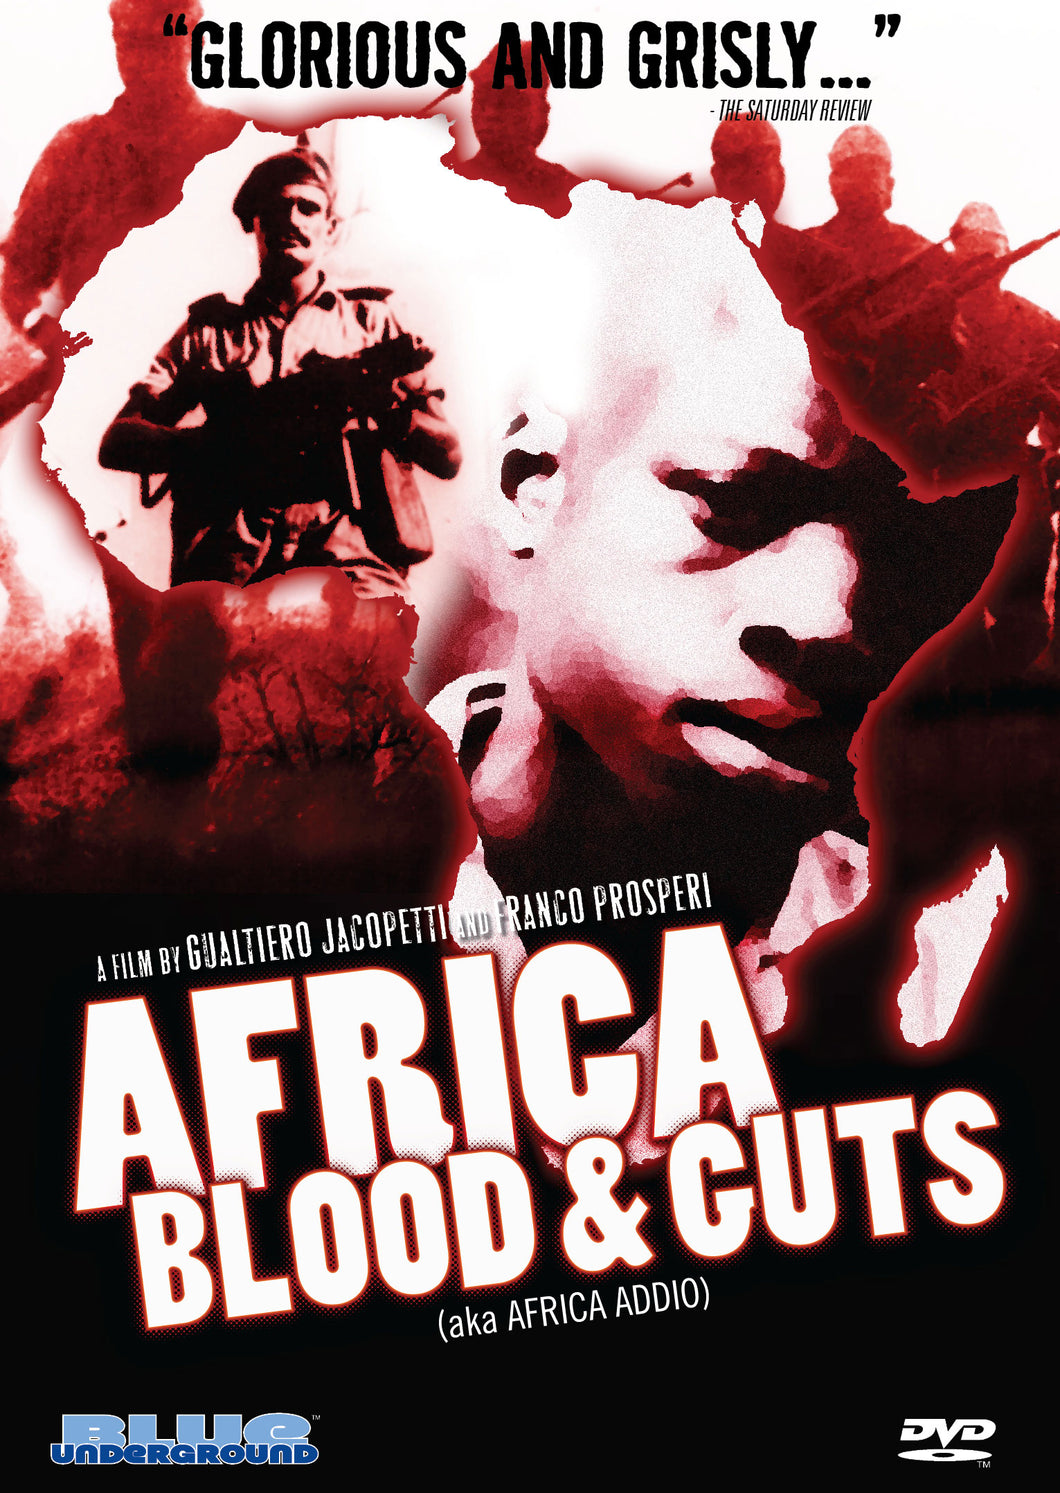 Africa Blood & Guts (aka Africa Addio) (DVD)